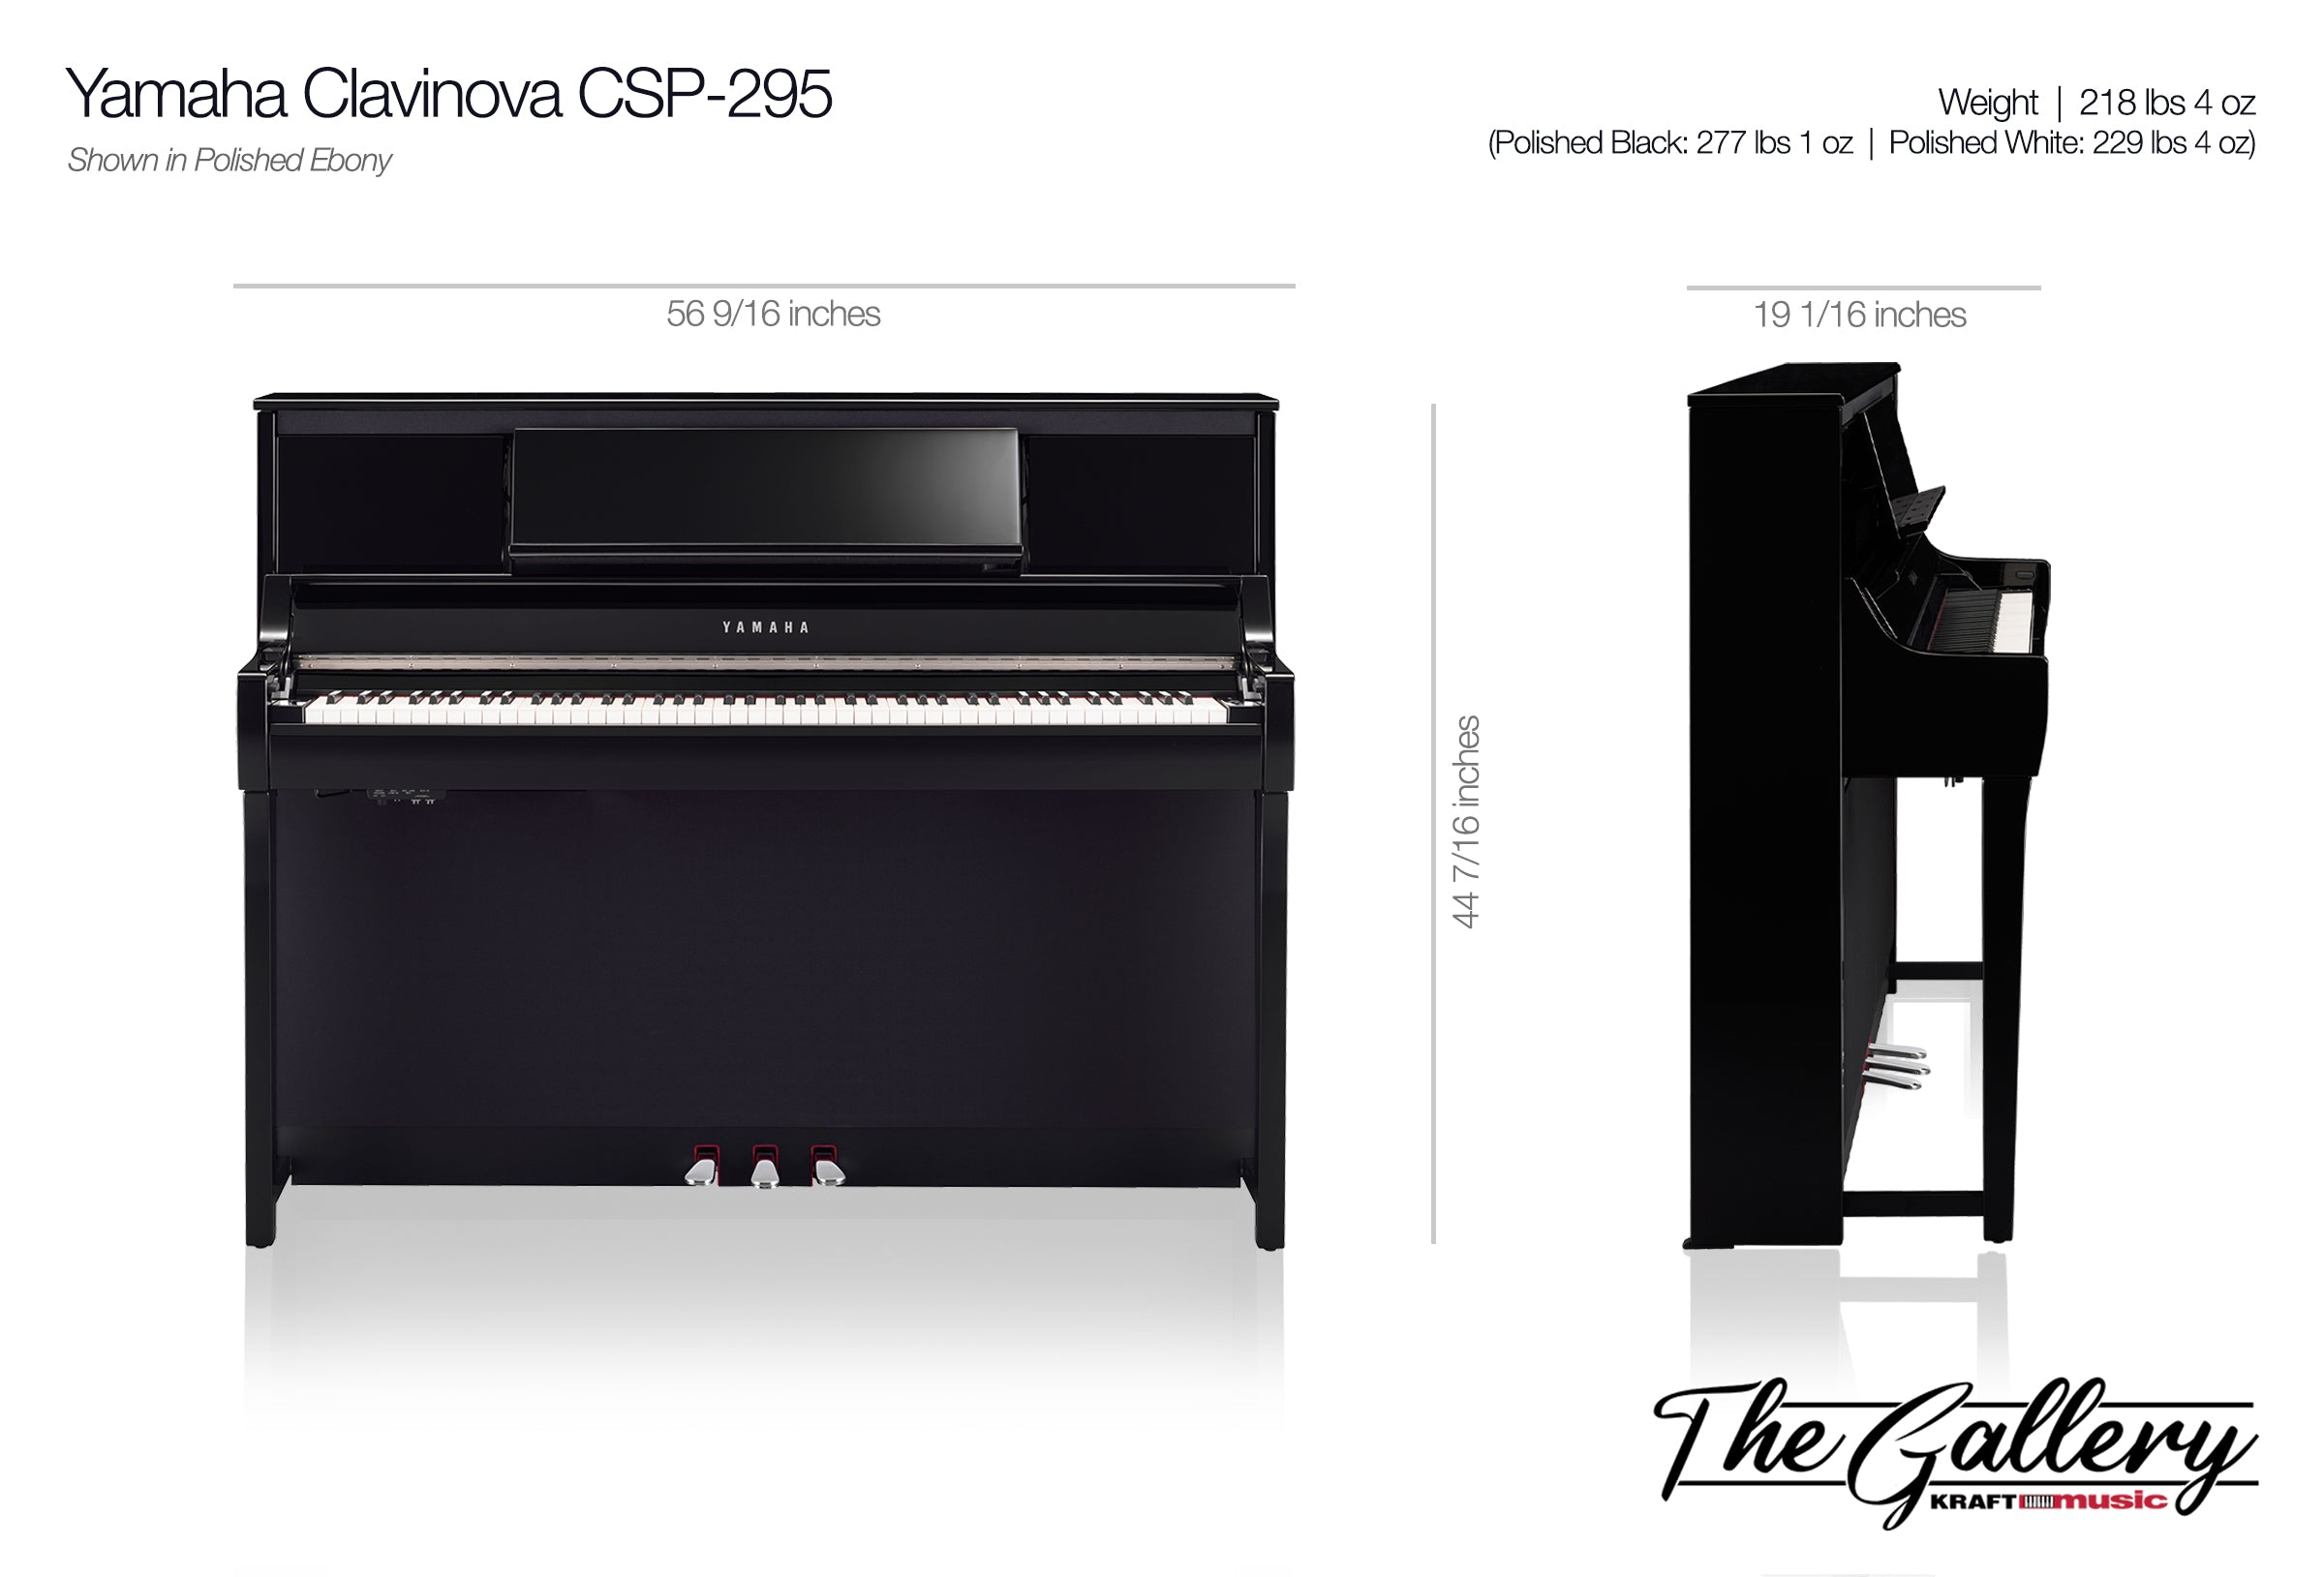 Yamaha Clavinova CSP-295 - Dimensions